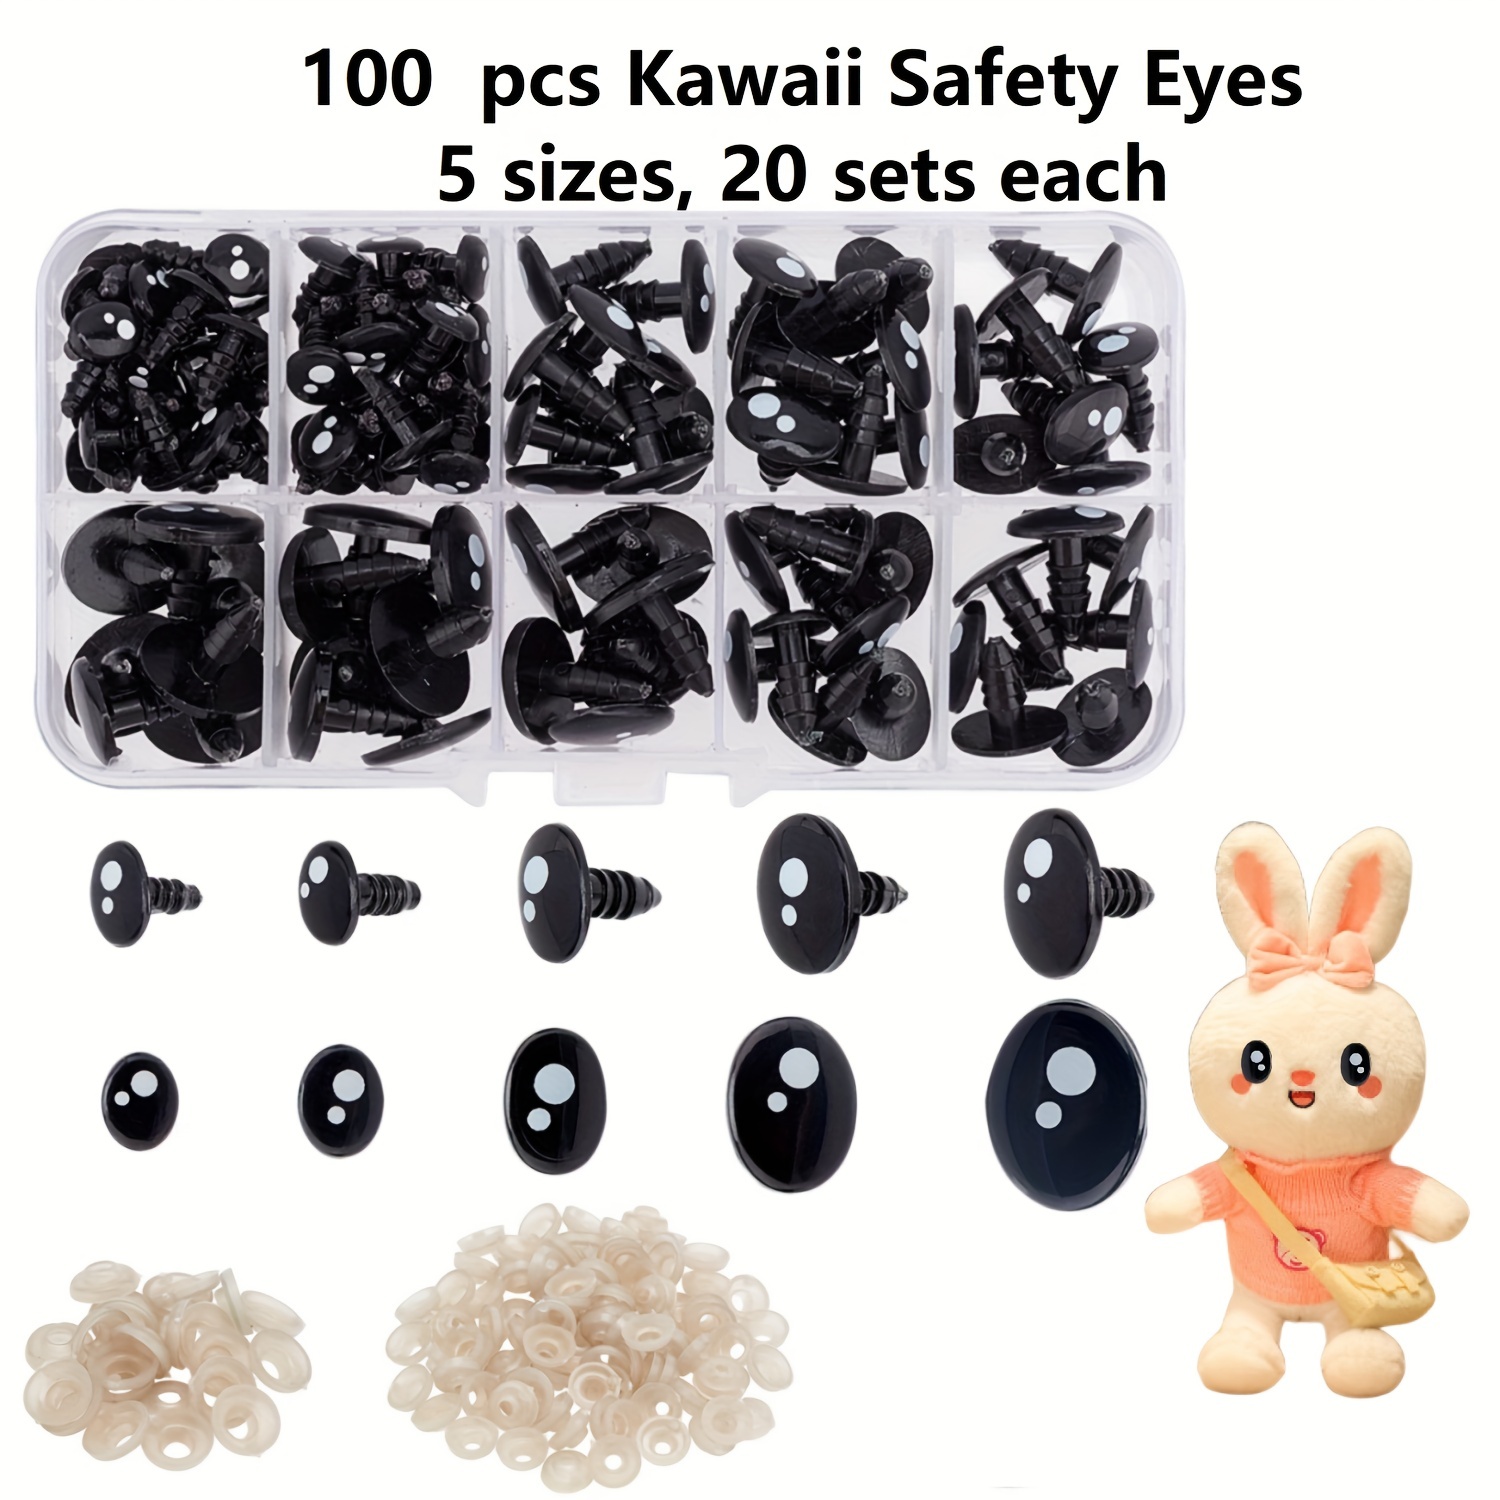 100pcs Crochet Eyes For Animals Doll Eyes Kawaii Safety Eyes